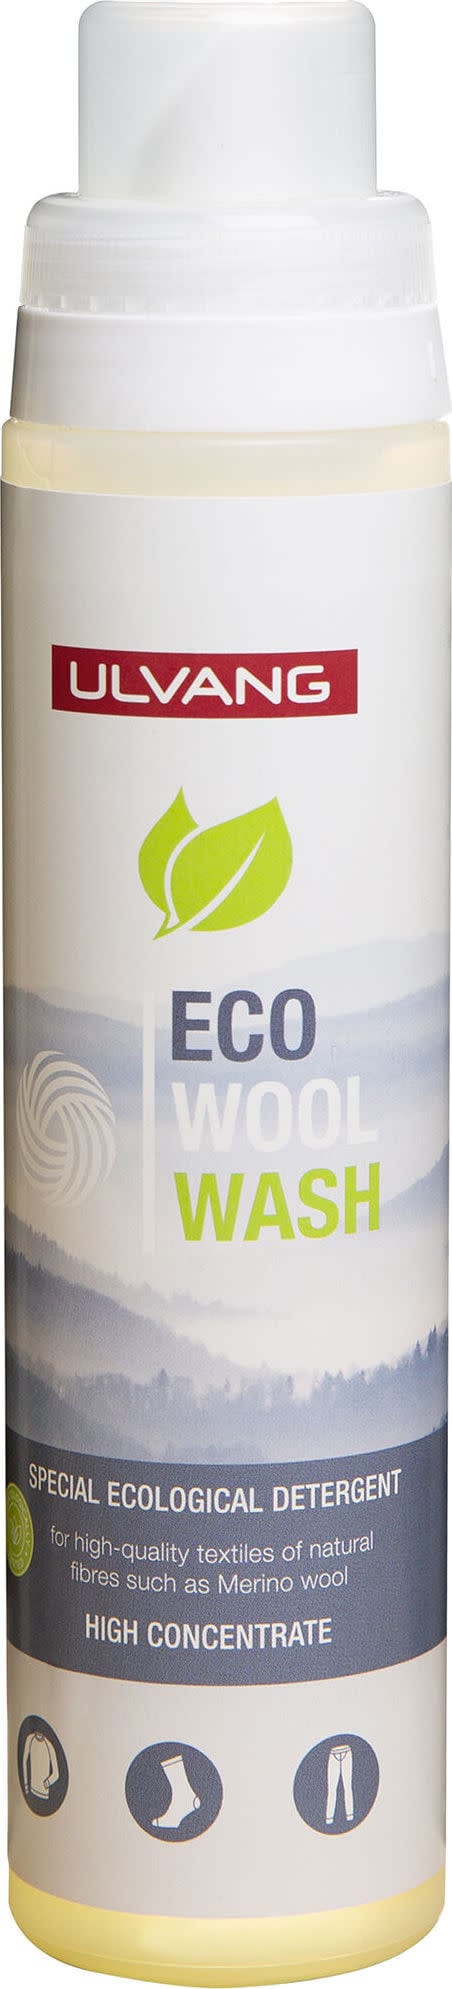 Ulvang Eco Wool Wash 250 ml Unspecified Ulvang